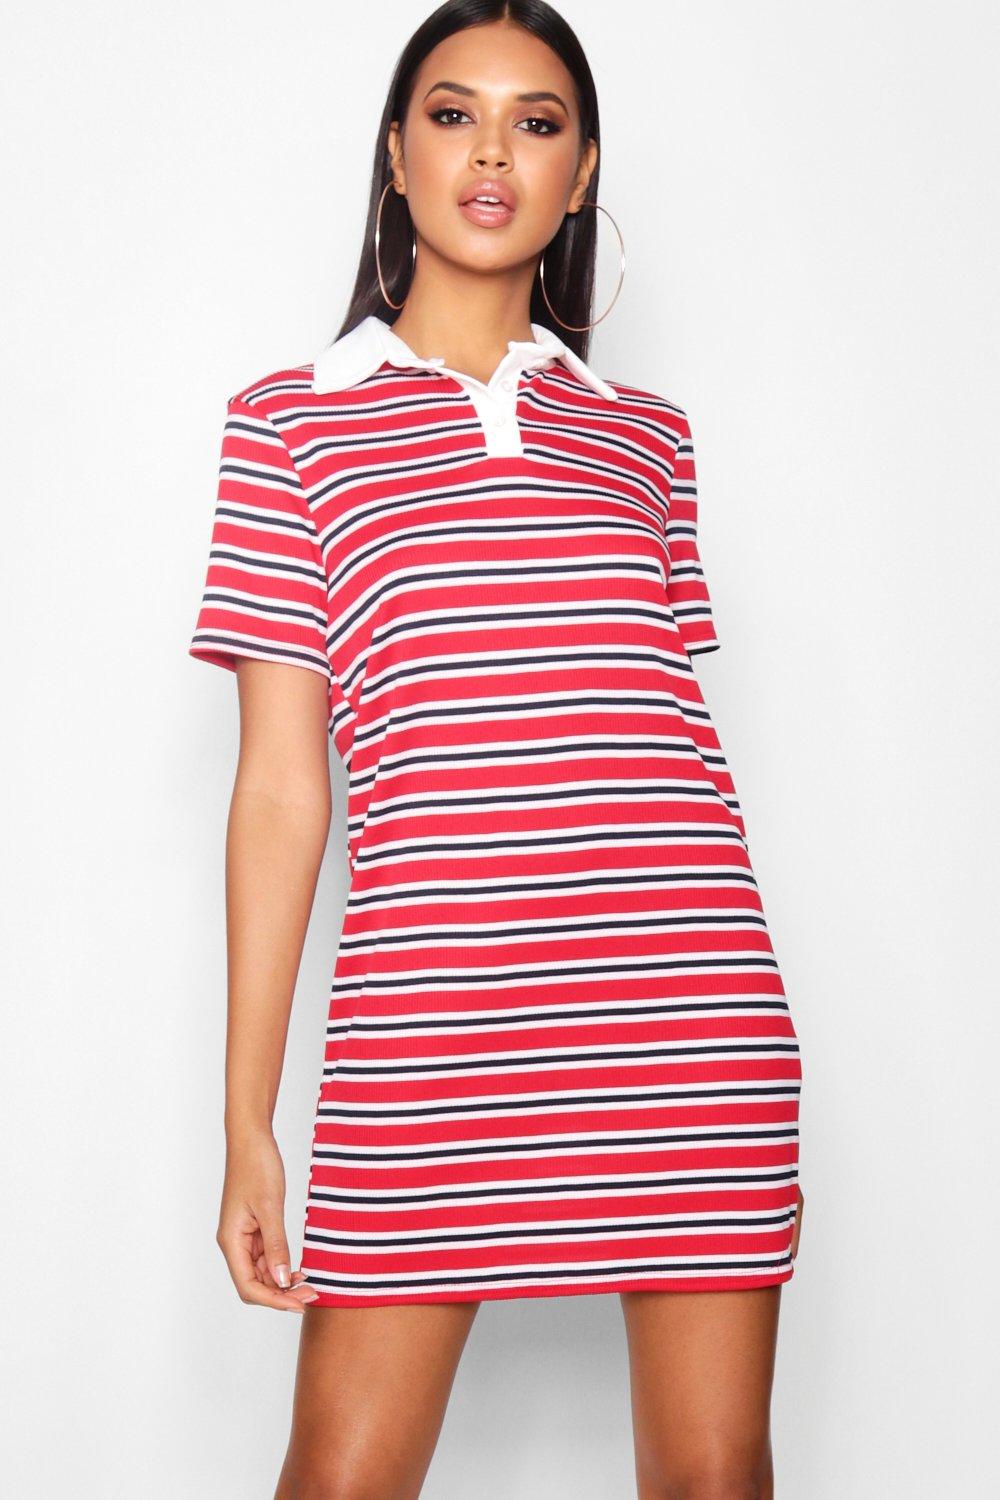 red striped t shirt dress